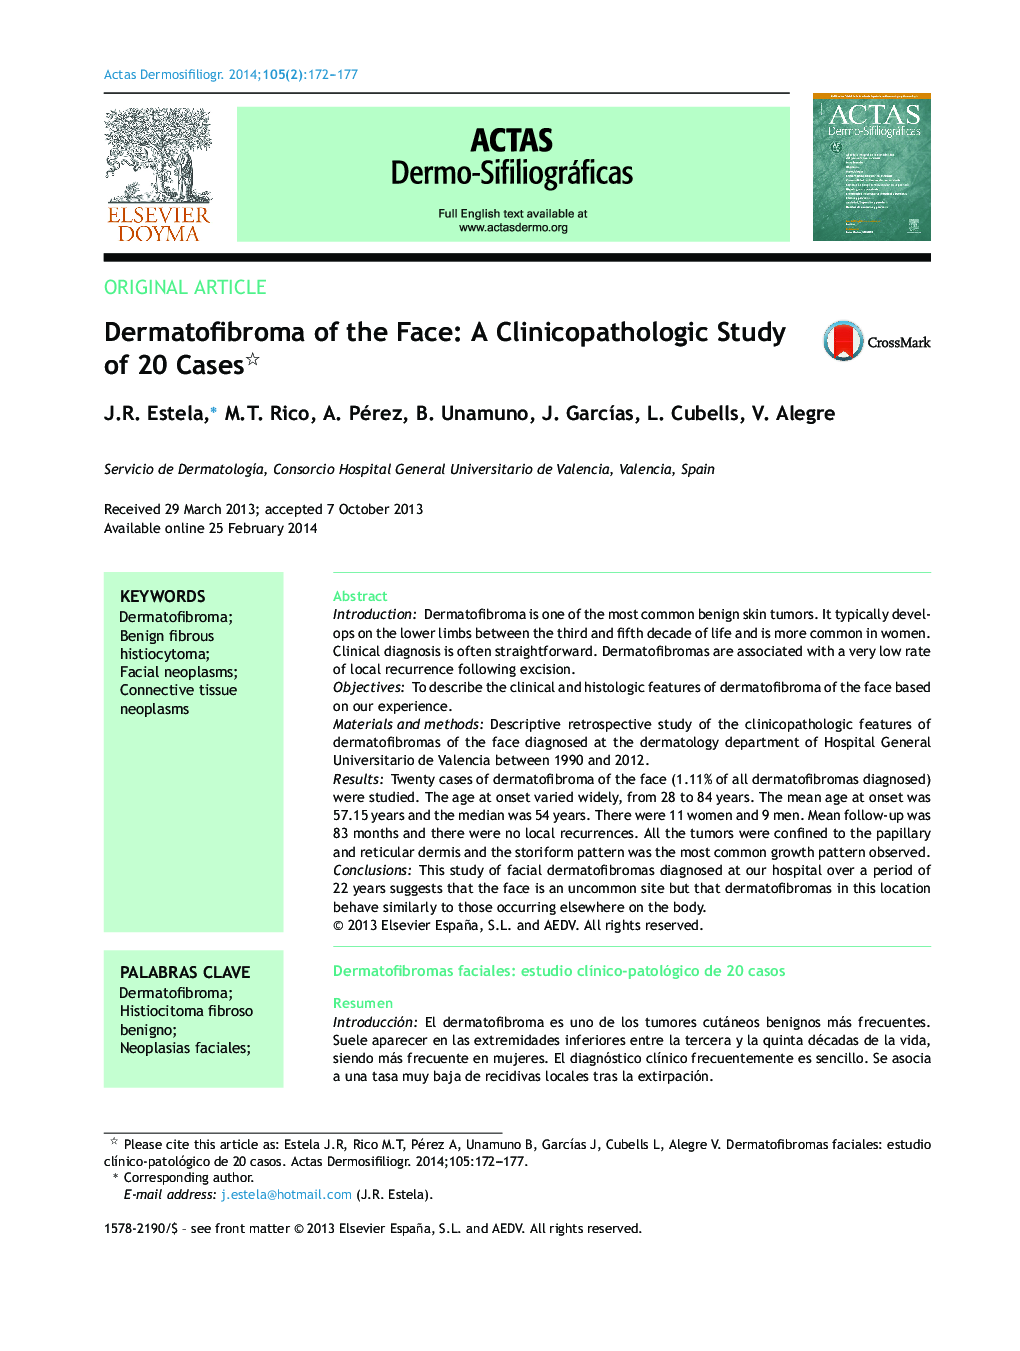 Dermatofibroma of the Face: A Clinicopathologic Study of 20 Cases 